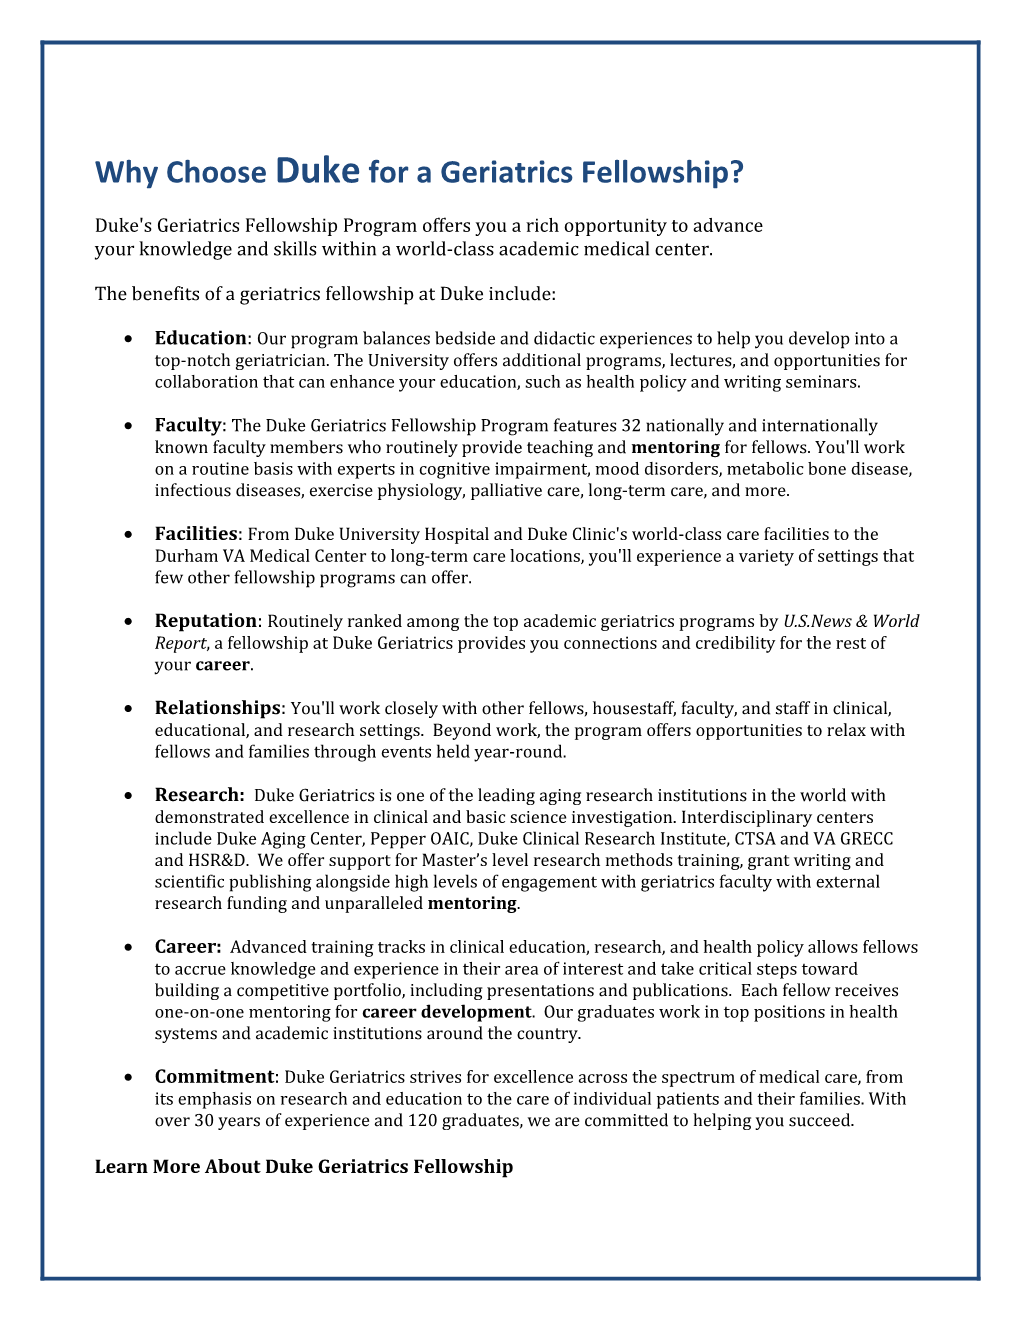 Why Choose Duke for a Geriatrics Fellowship?